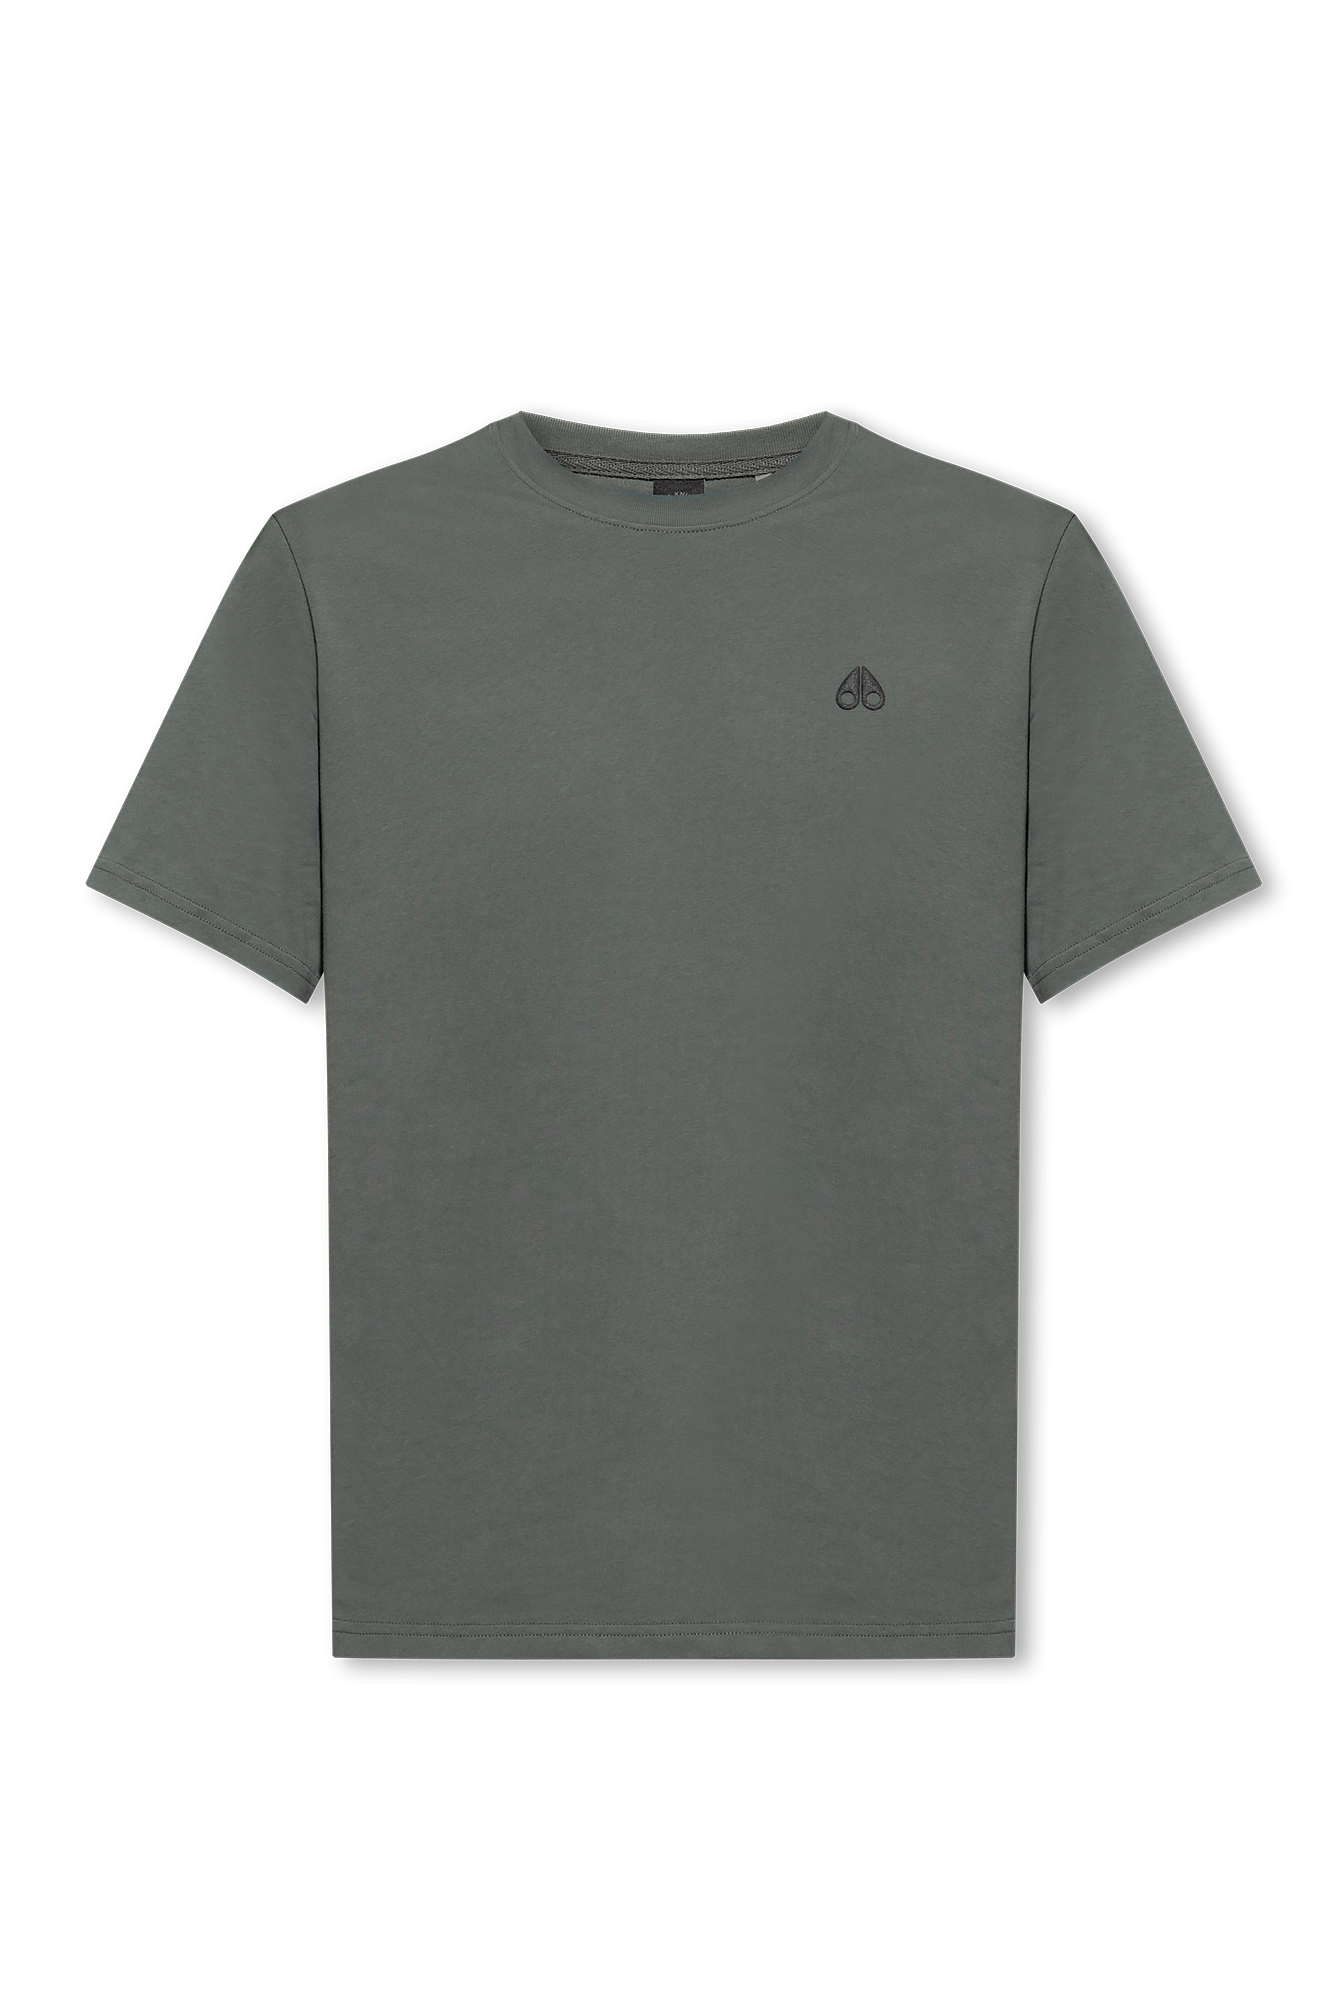 Moose Knuckles ‘Satellite’ T-shirt